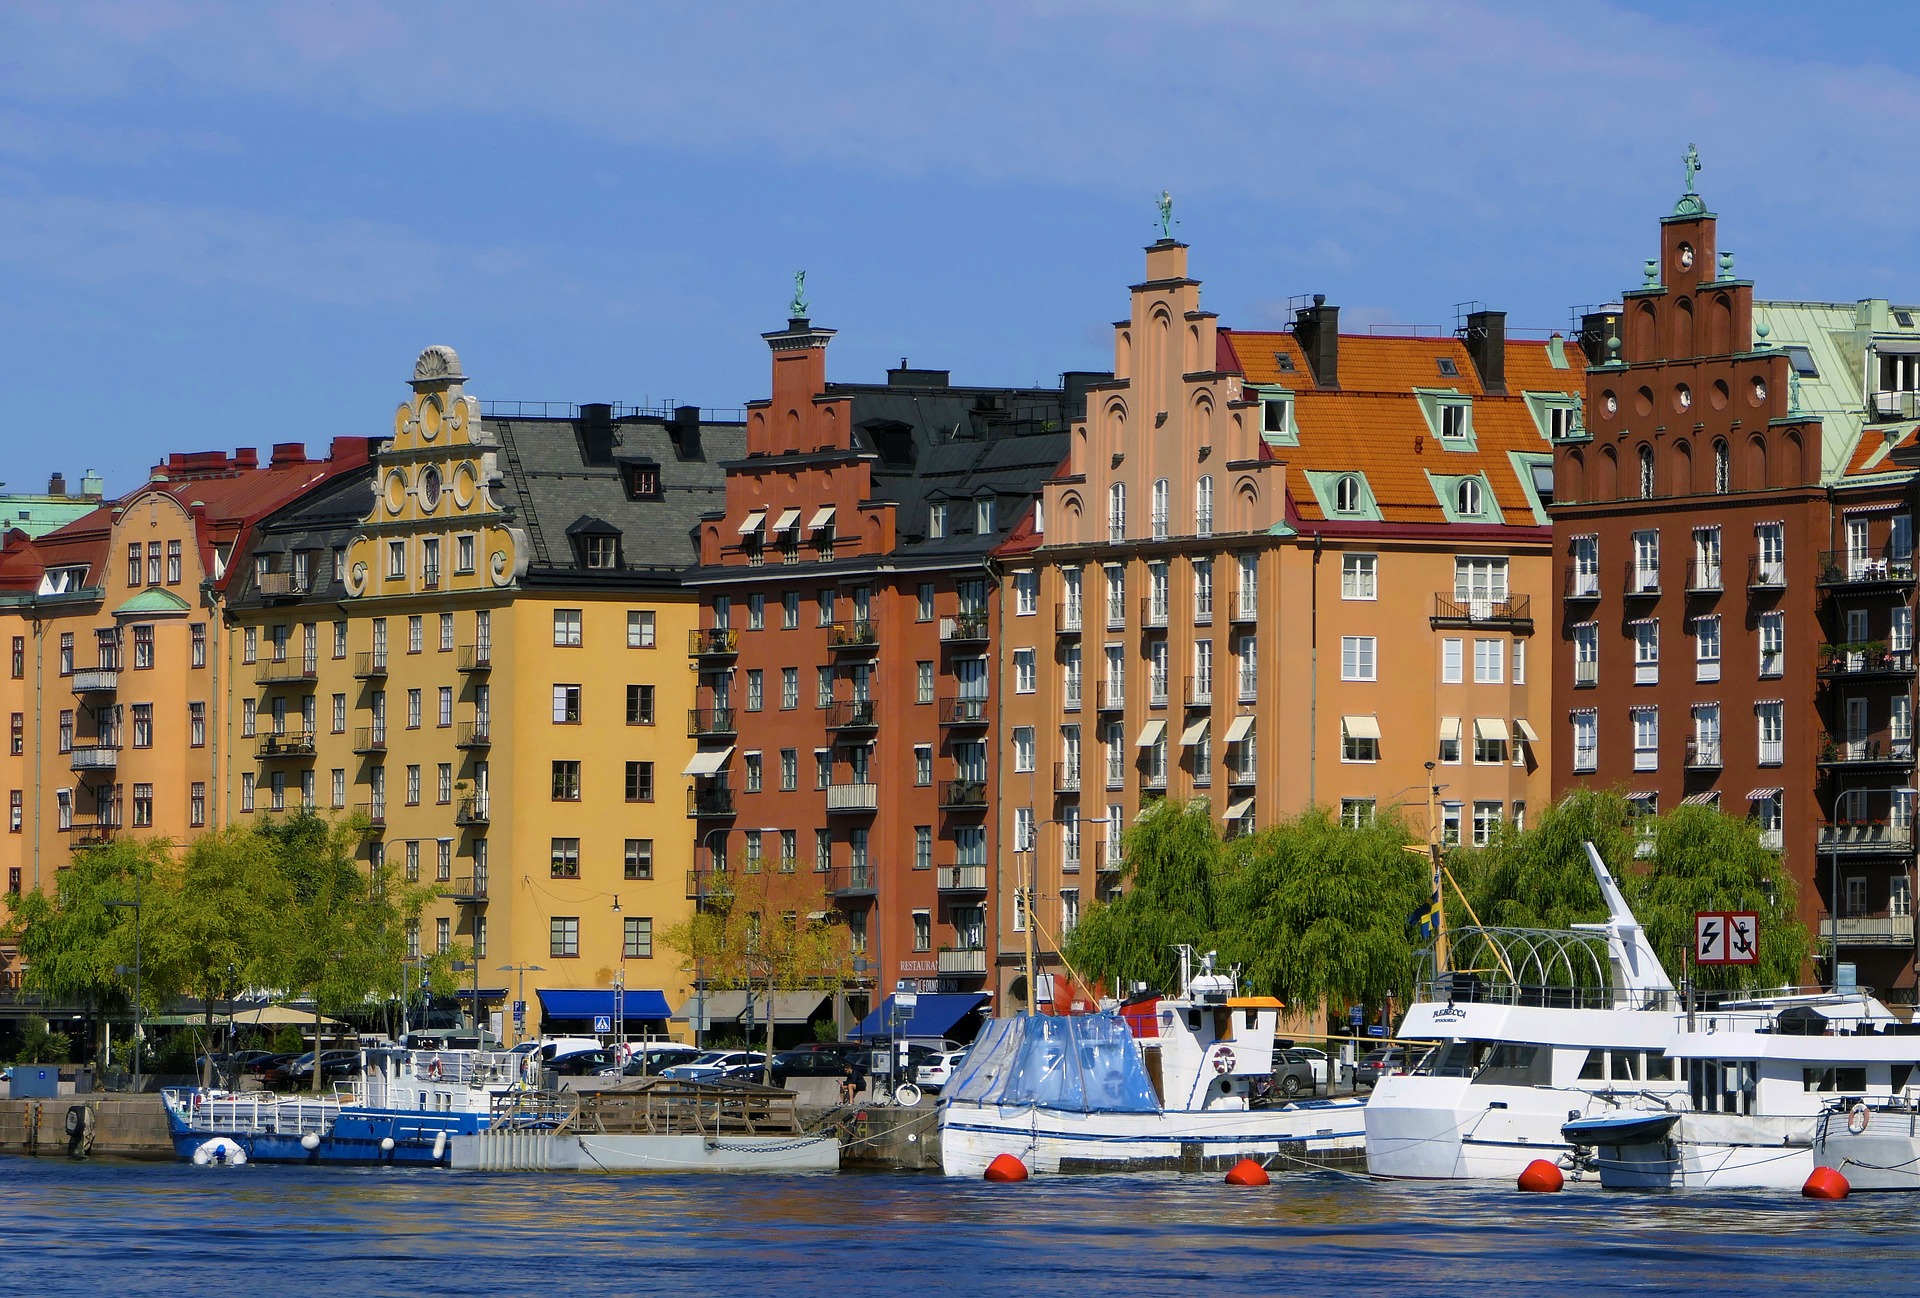 hyra lägenhet i stockholm